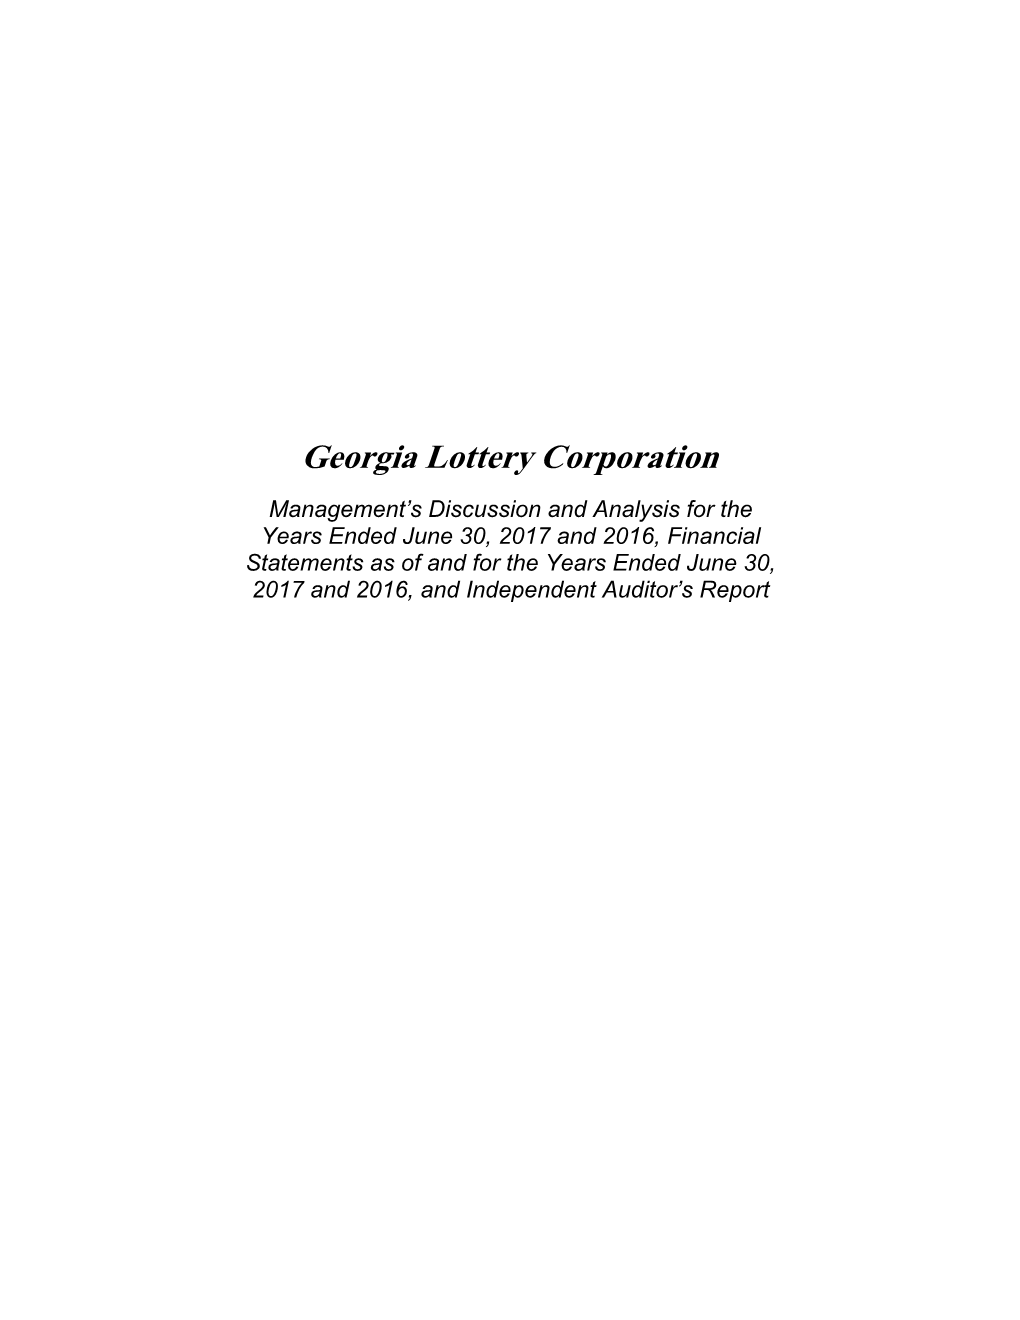 Georgia Lottery 2017 Financial Statements